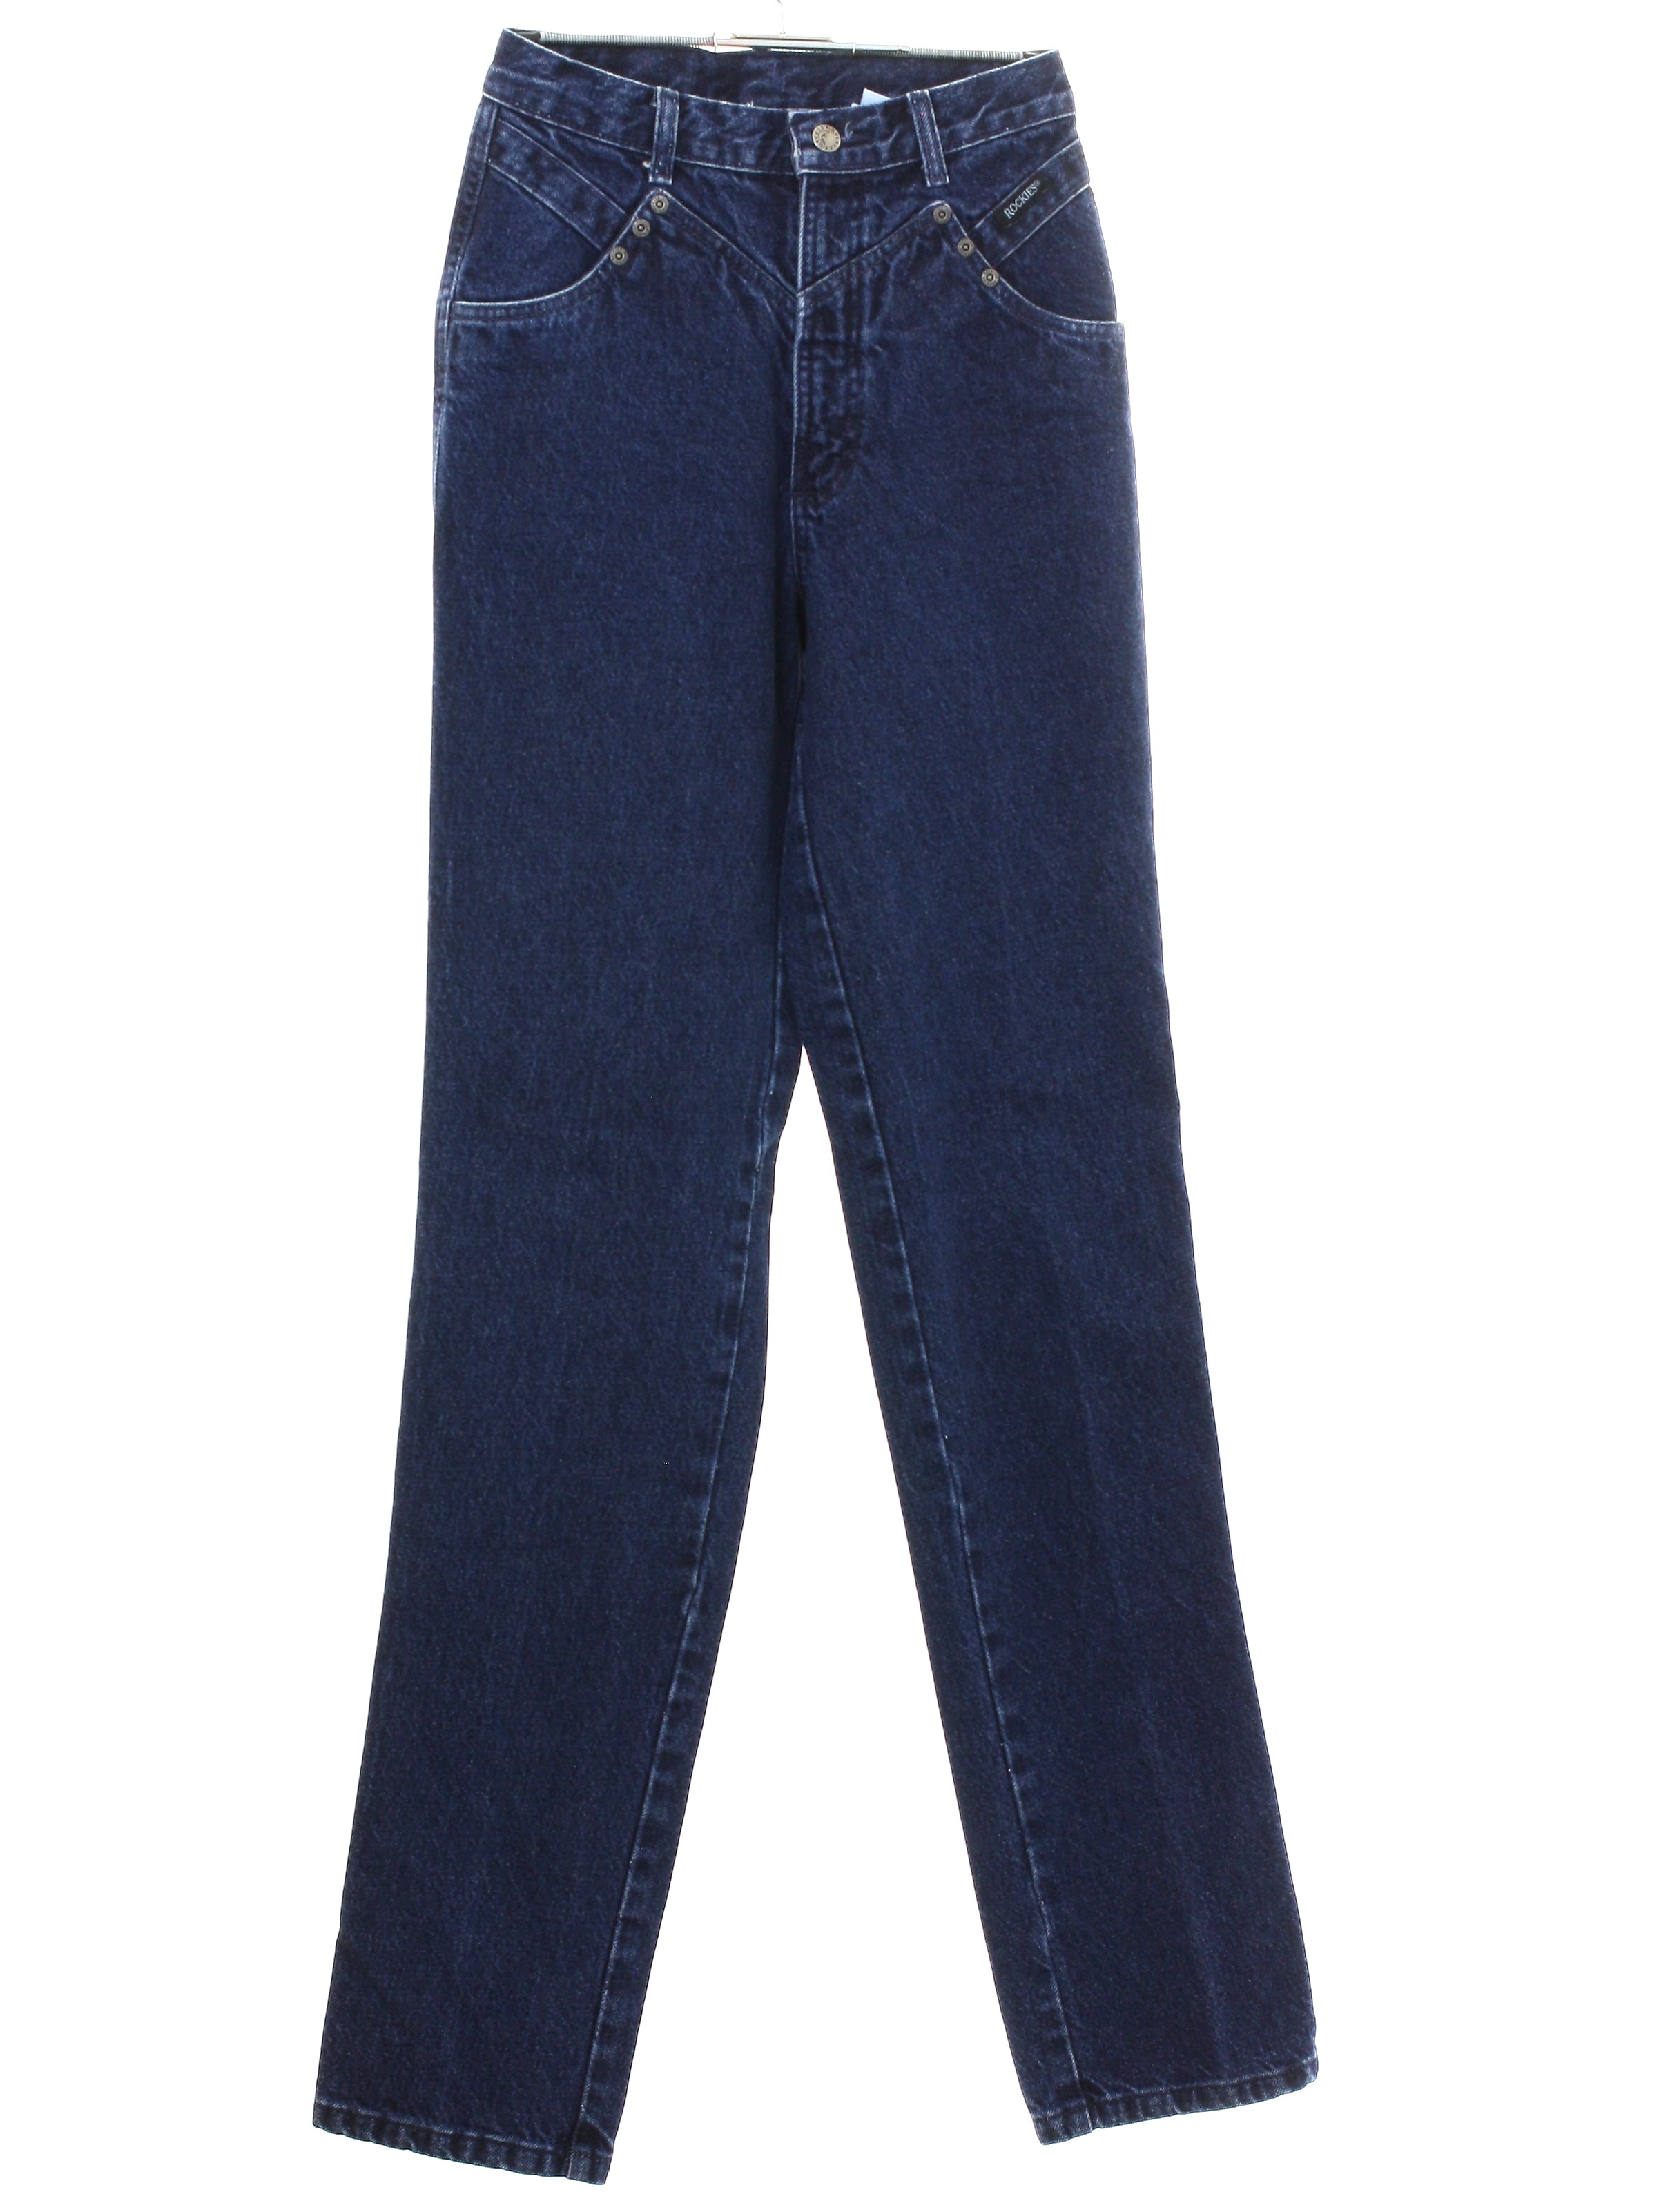 1980's Pants (Rockies): 80s -Rockies- Womens dark blue cotton denim ...